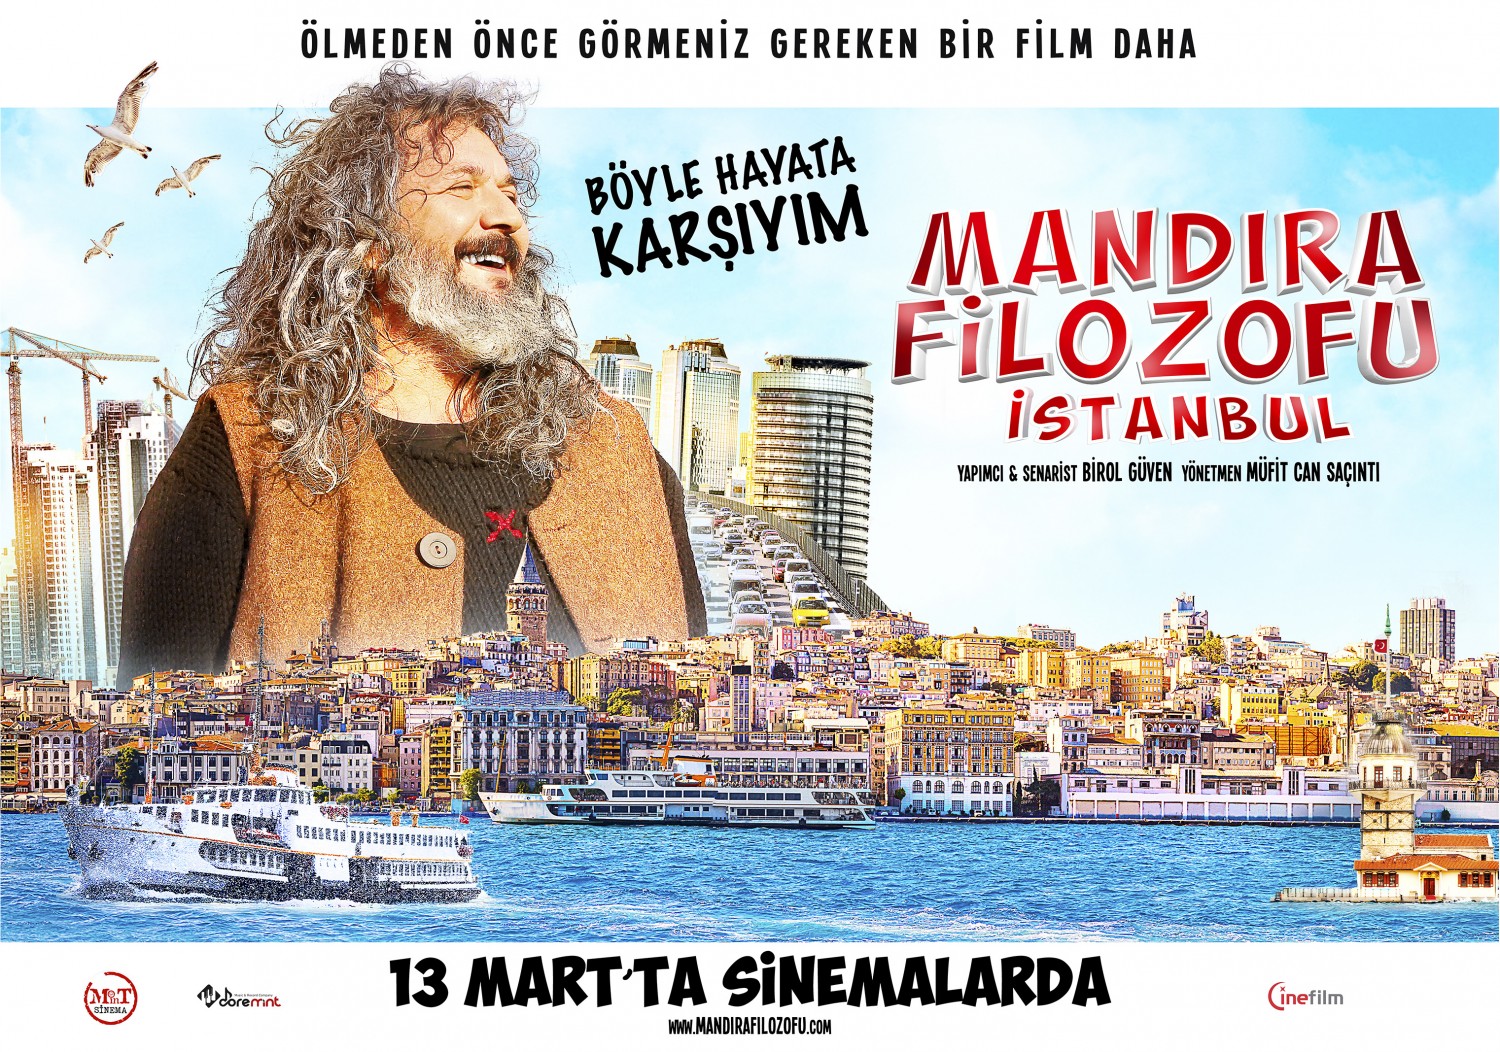 Extra Large Movie Poster Image for Mandira Filozofu (#3 of 3)